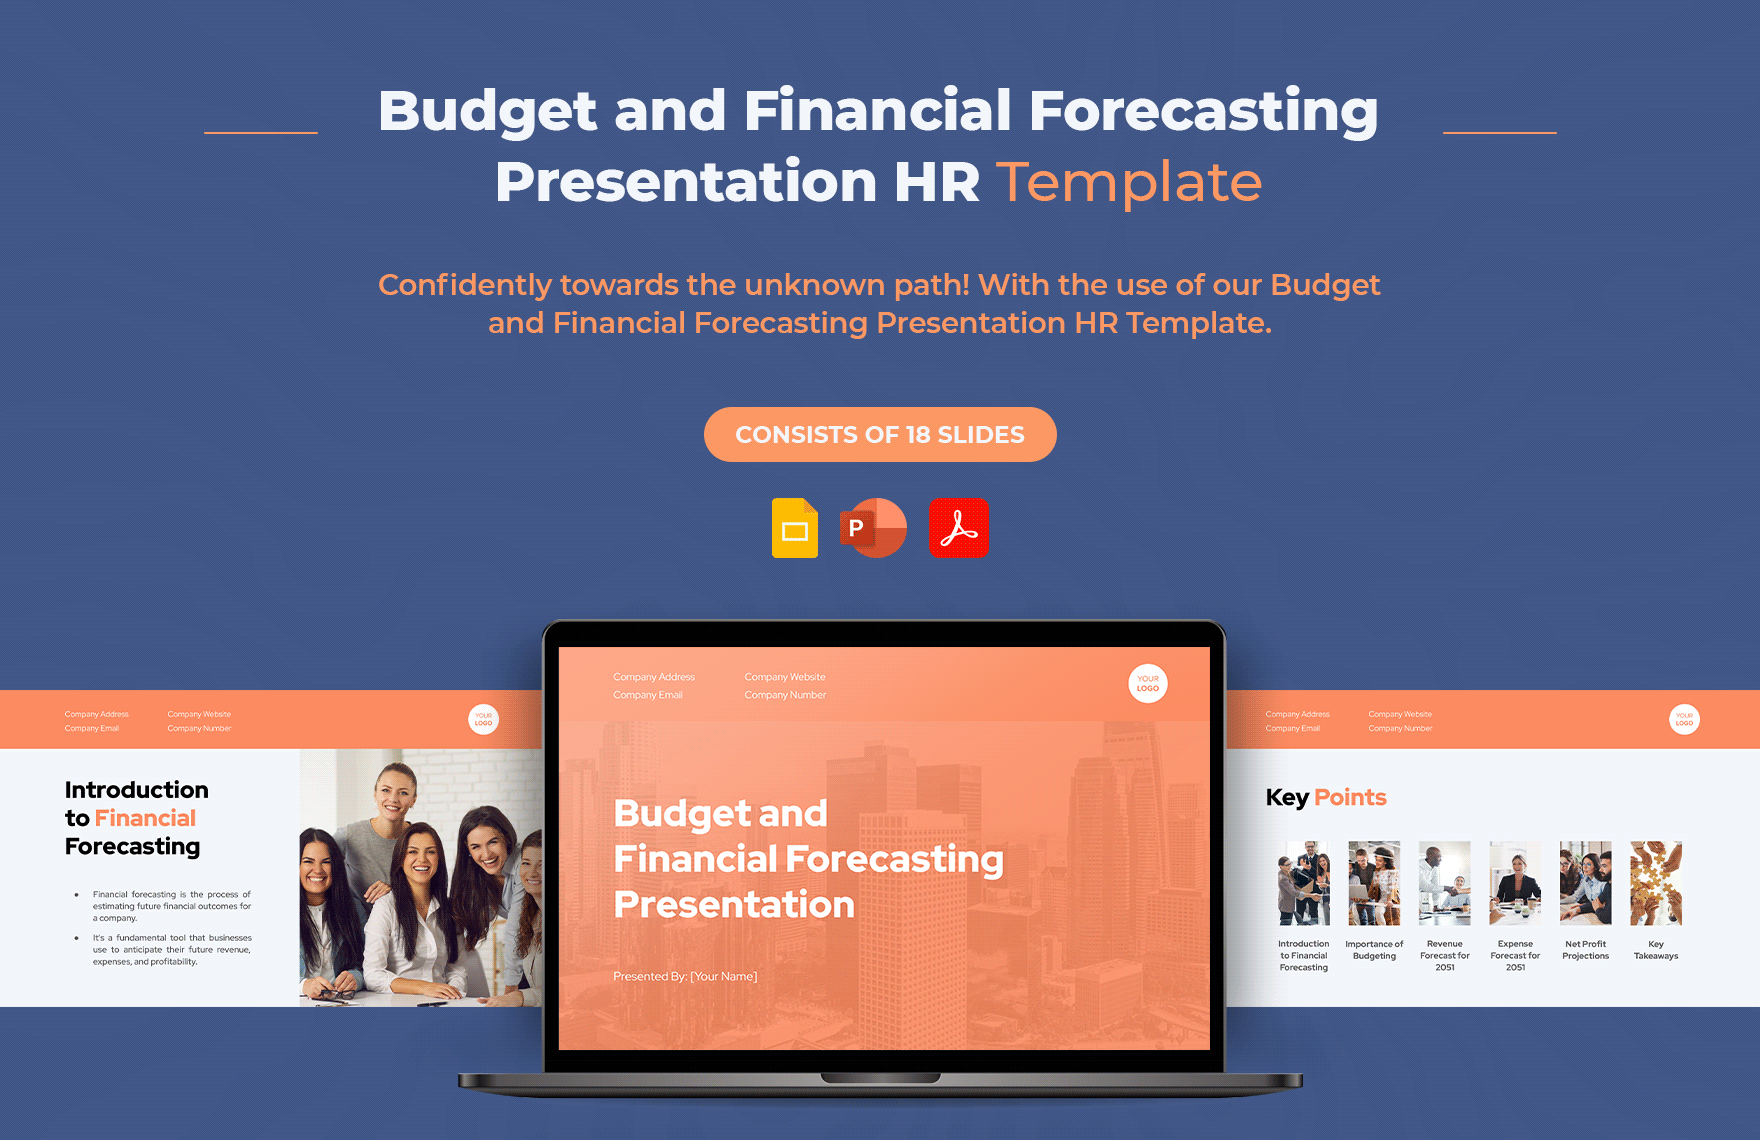 Budget and Financial Forecasting Presentation HR Template